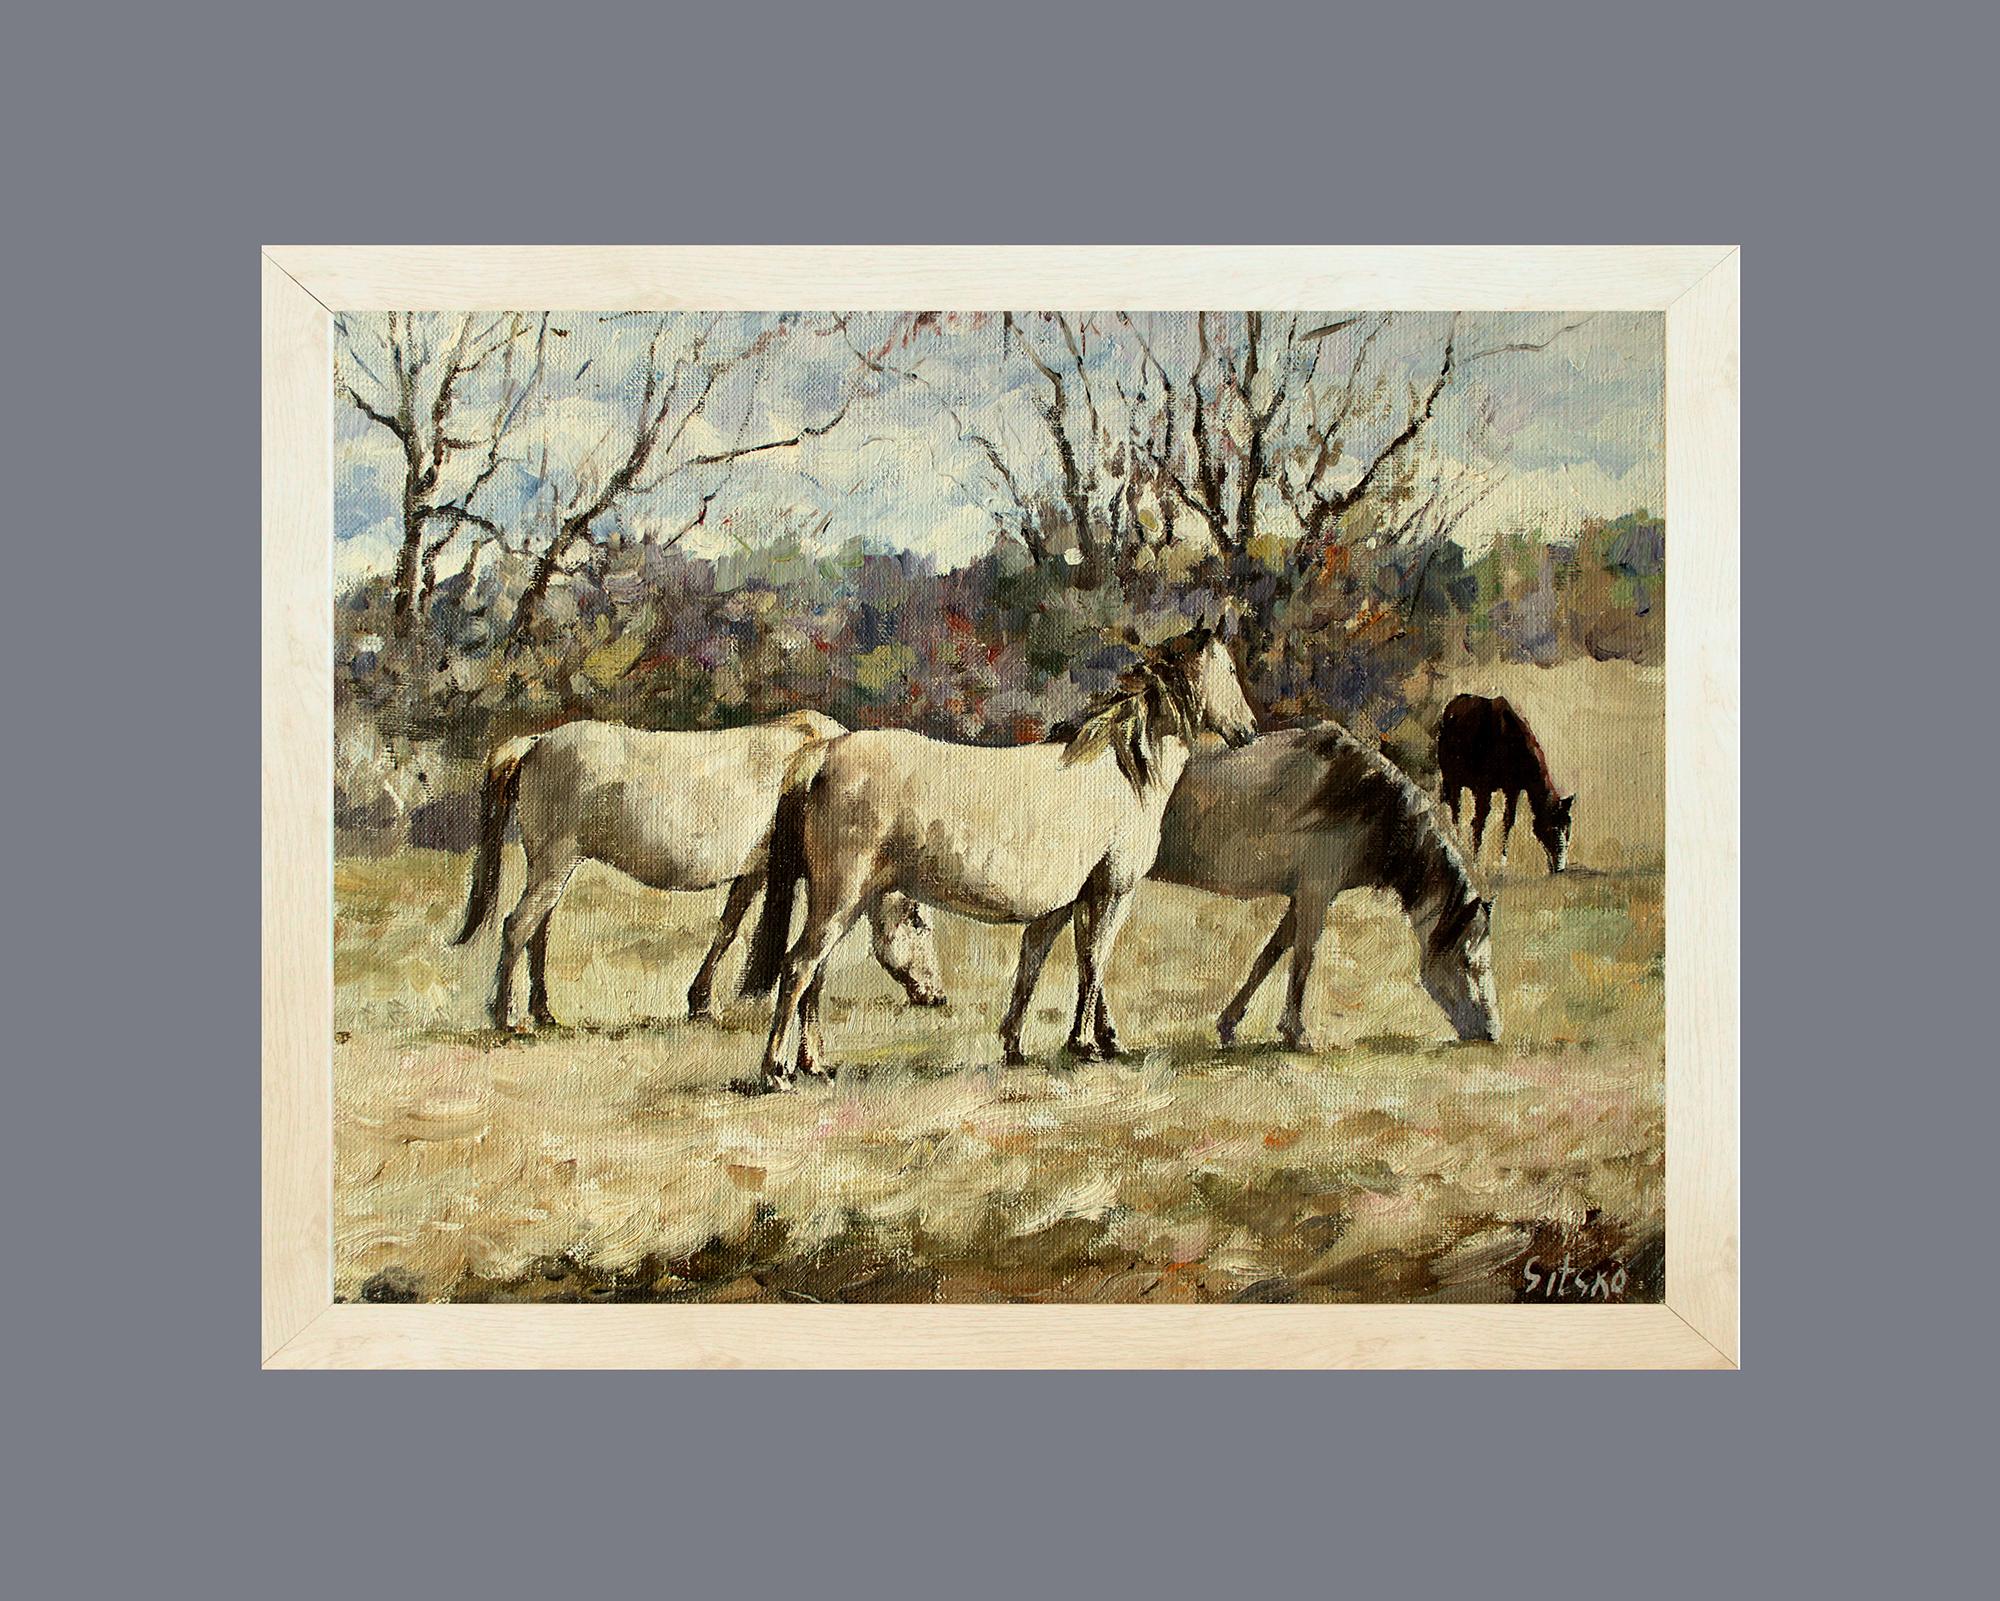 Horses - Painting by Andrei Sitsko